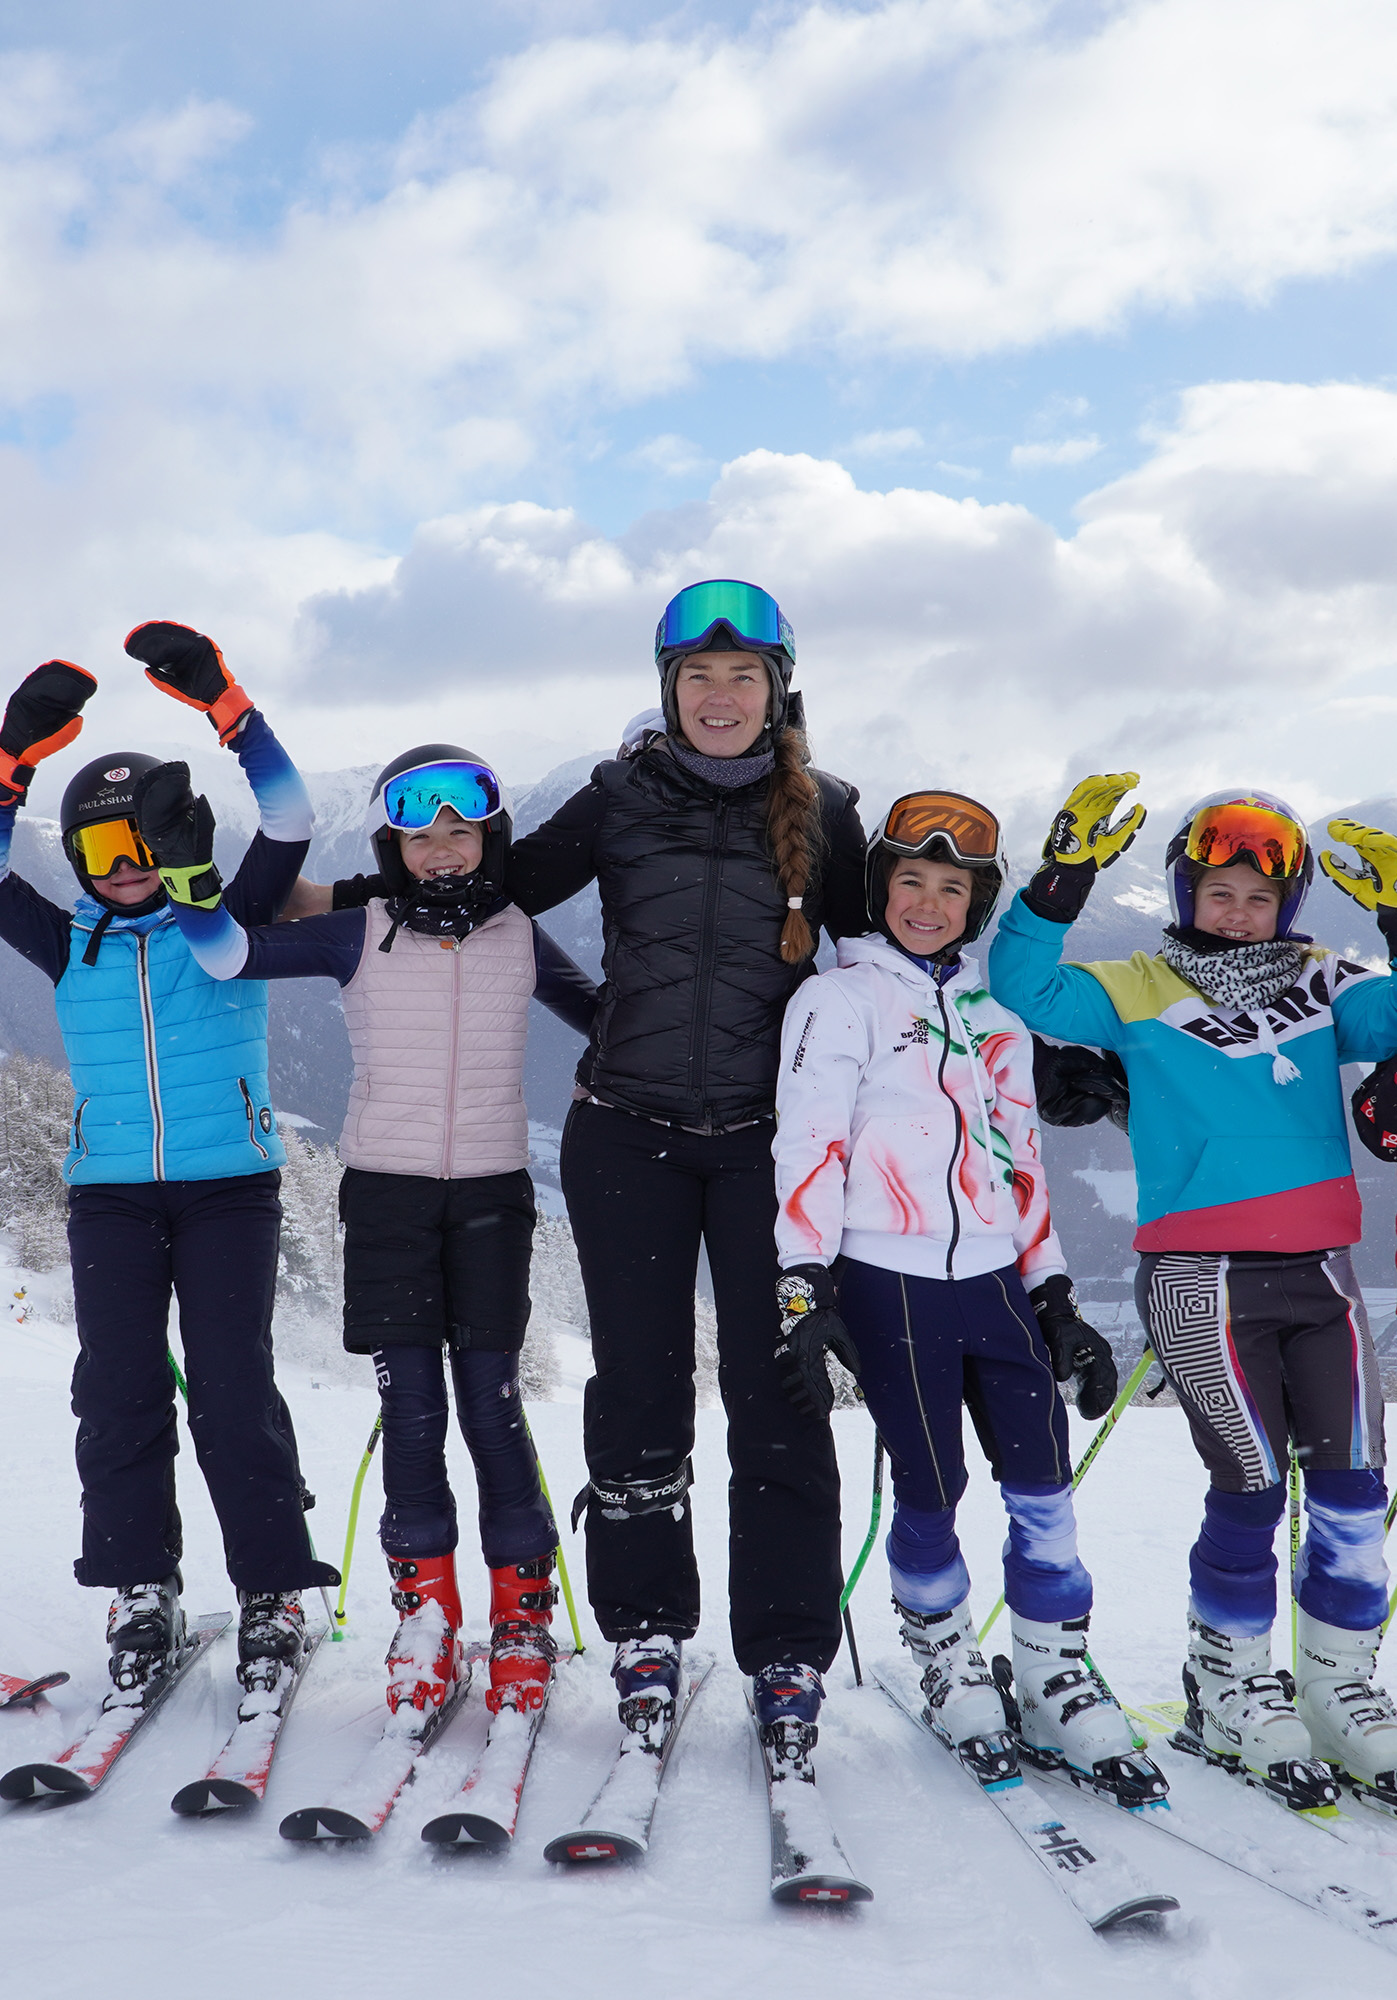 Skids Kinderfestival mit den Skistars